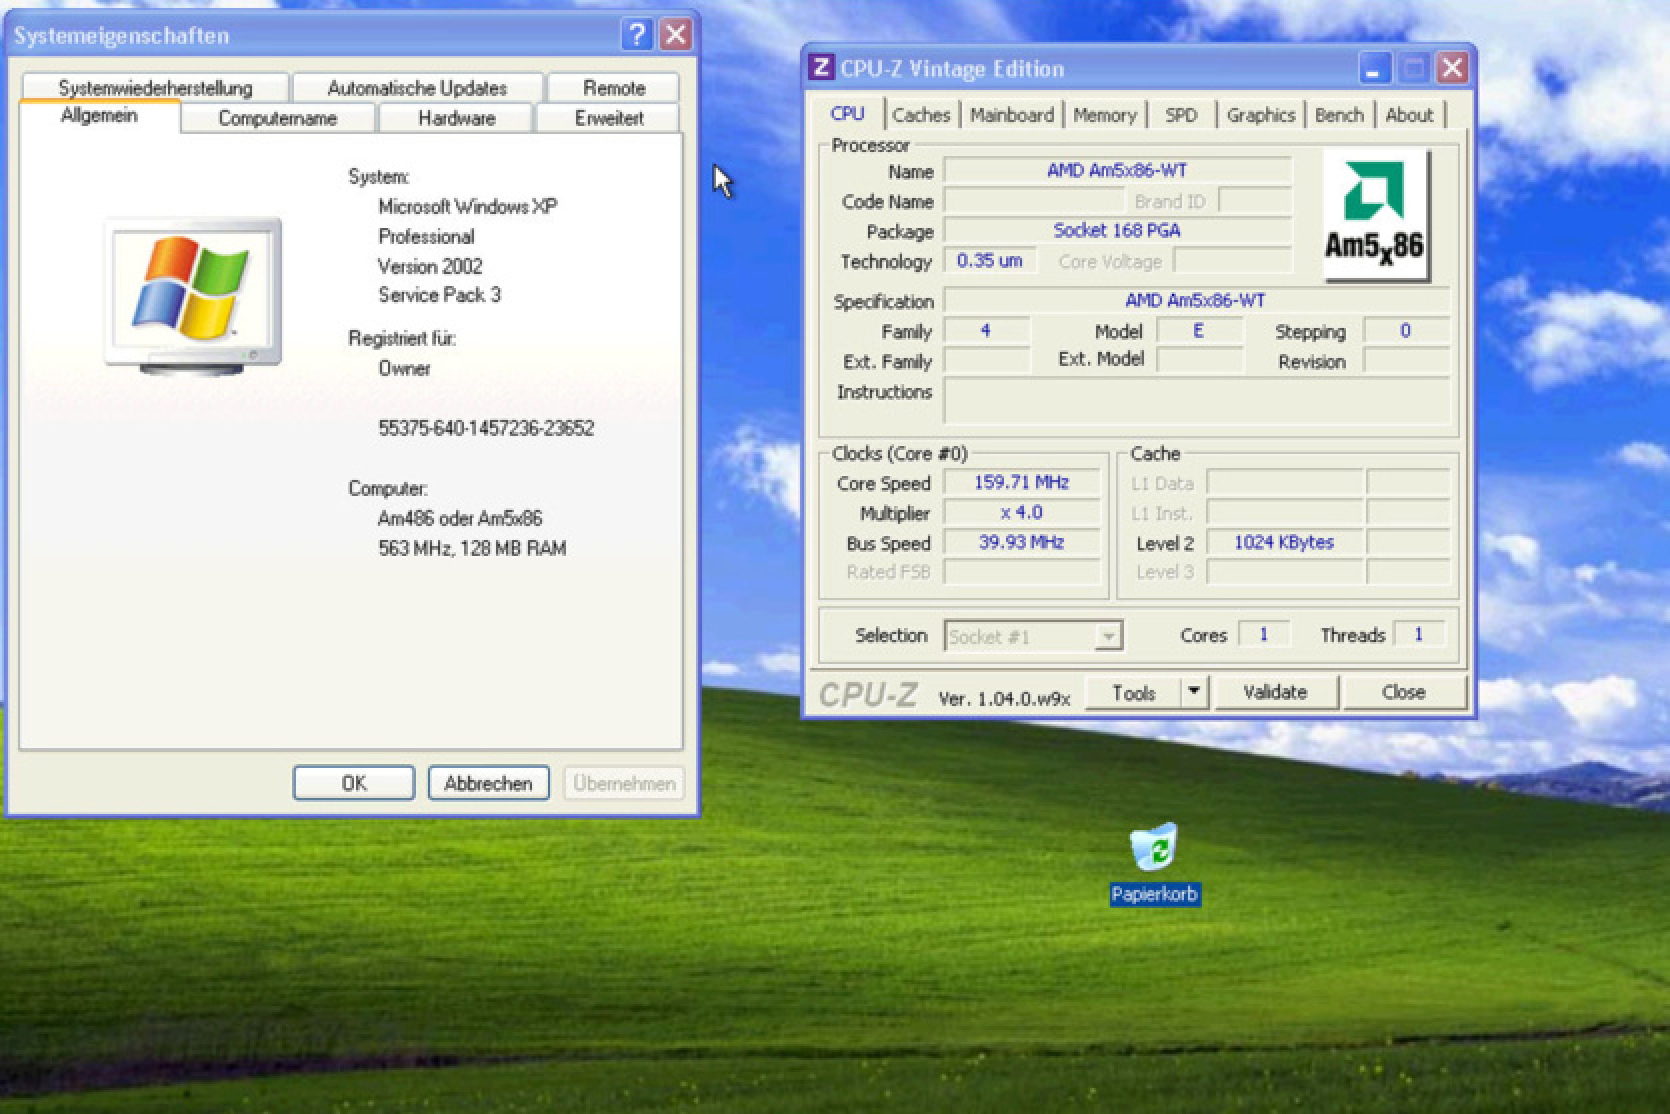 Combining two eras: Windows XP ran on the Intel i486 processor